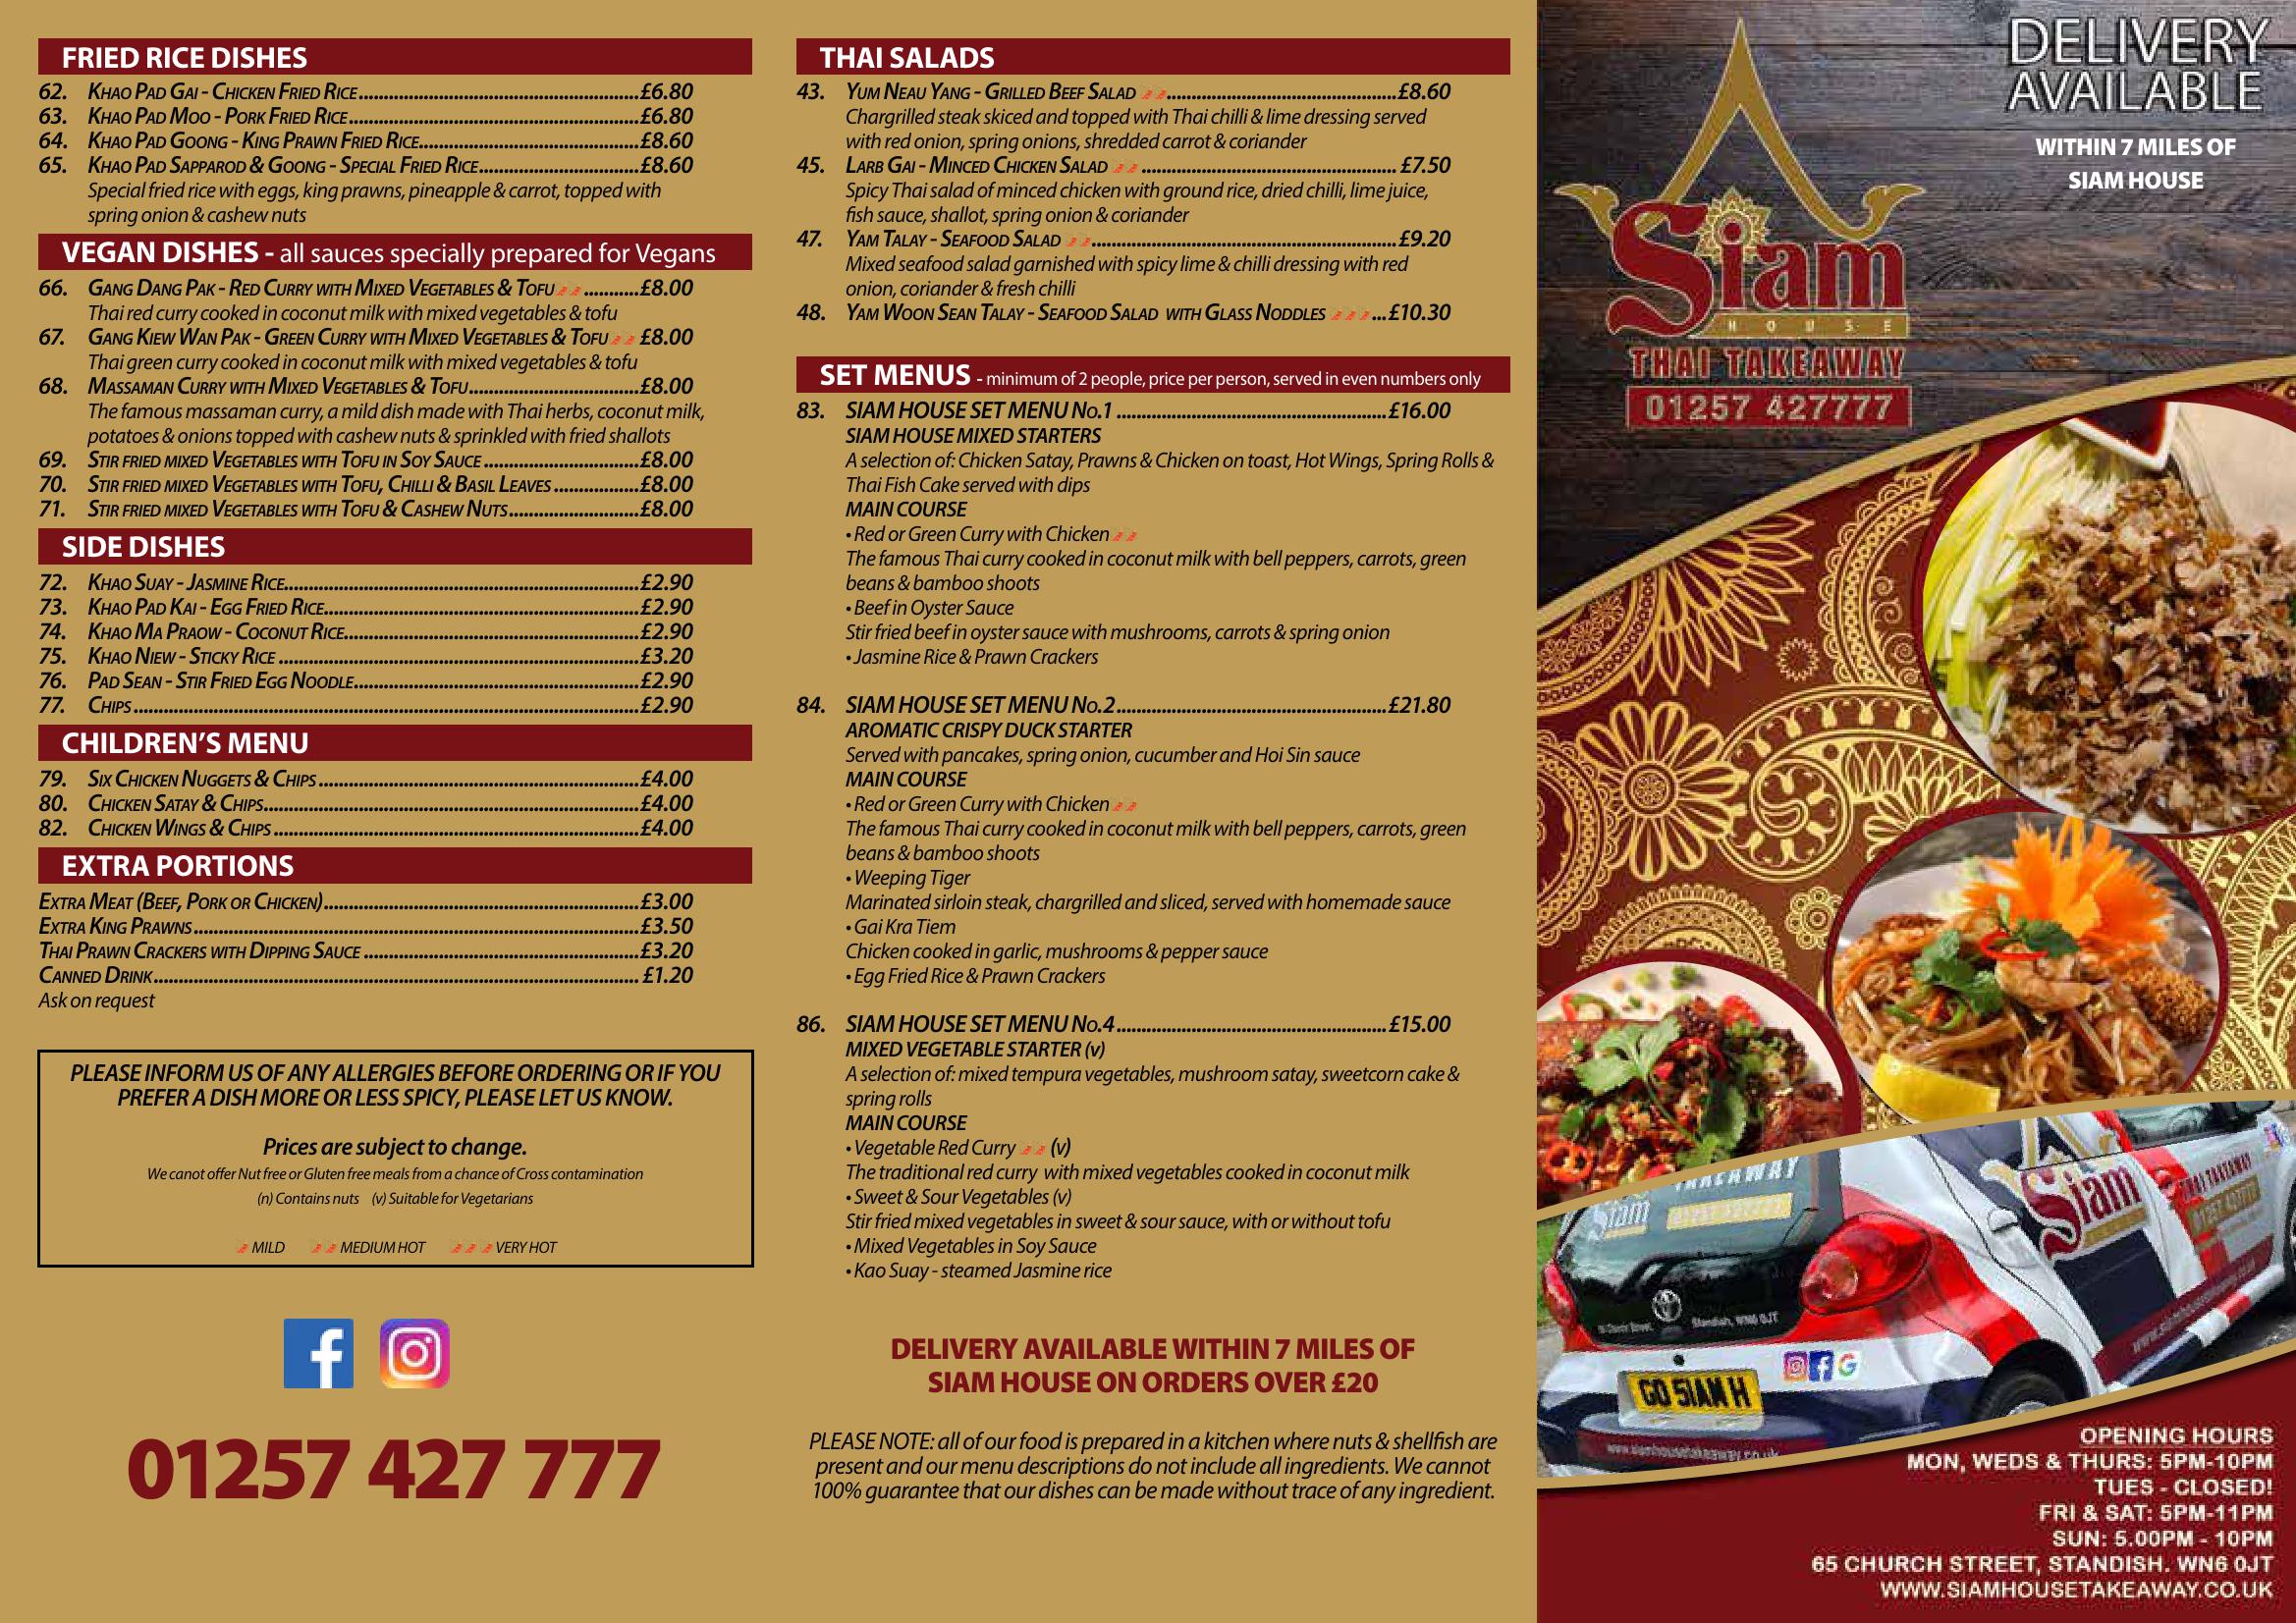 Siam House Thai Takeaway - main menu